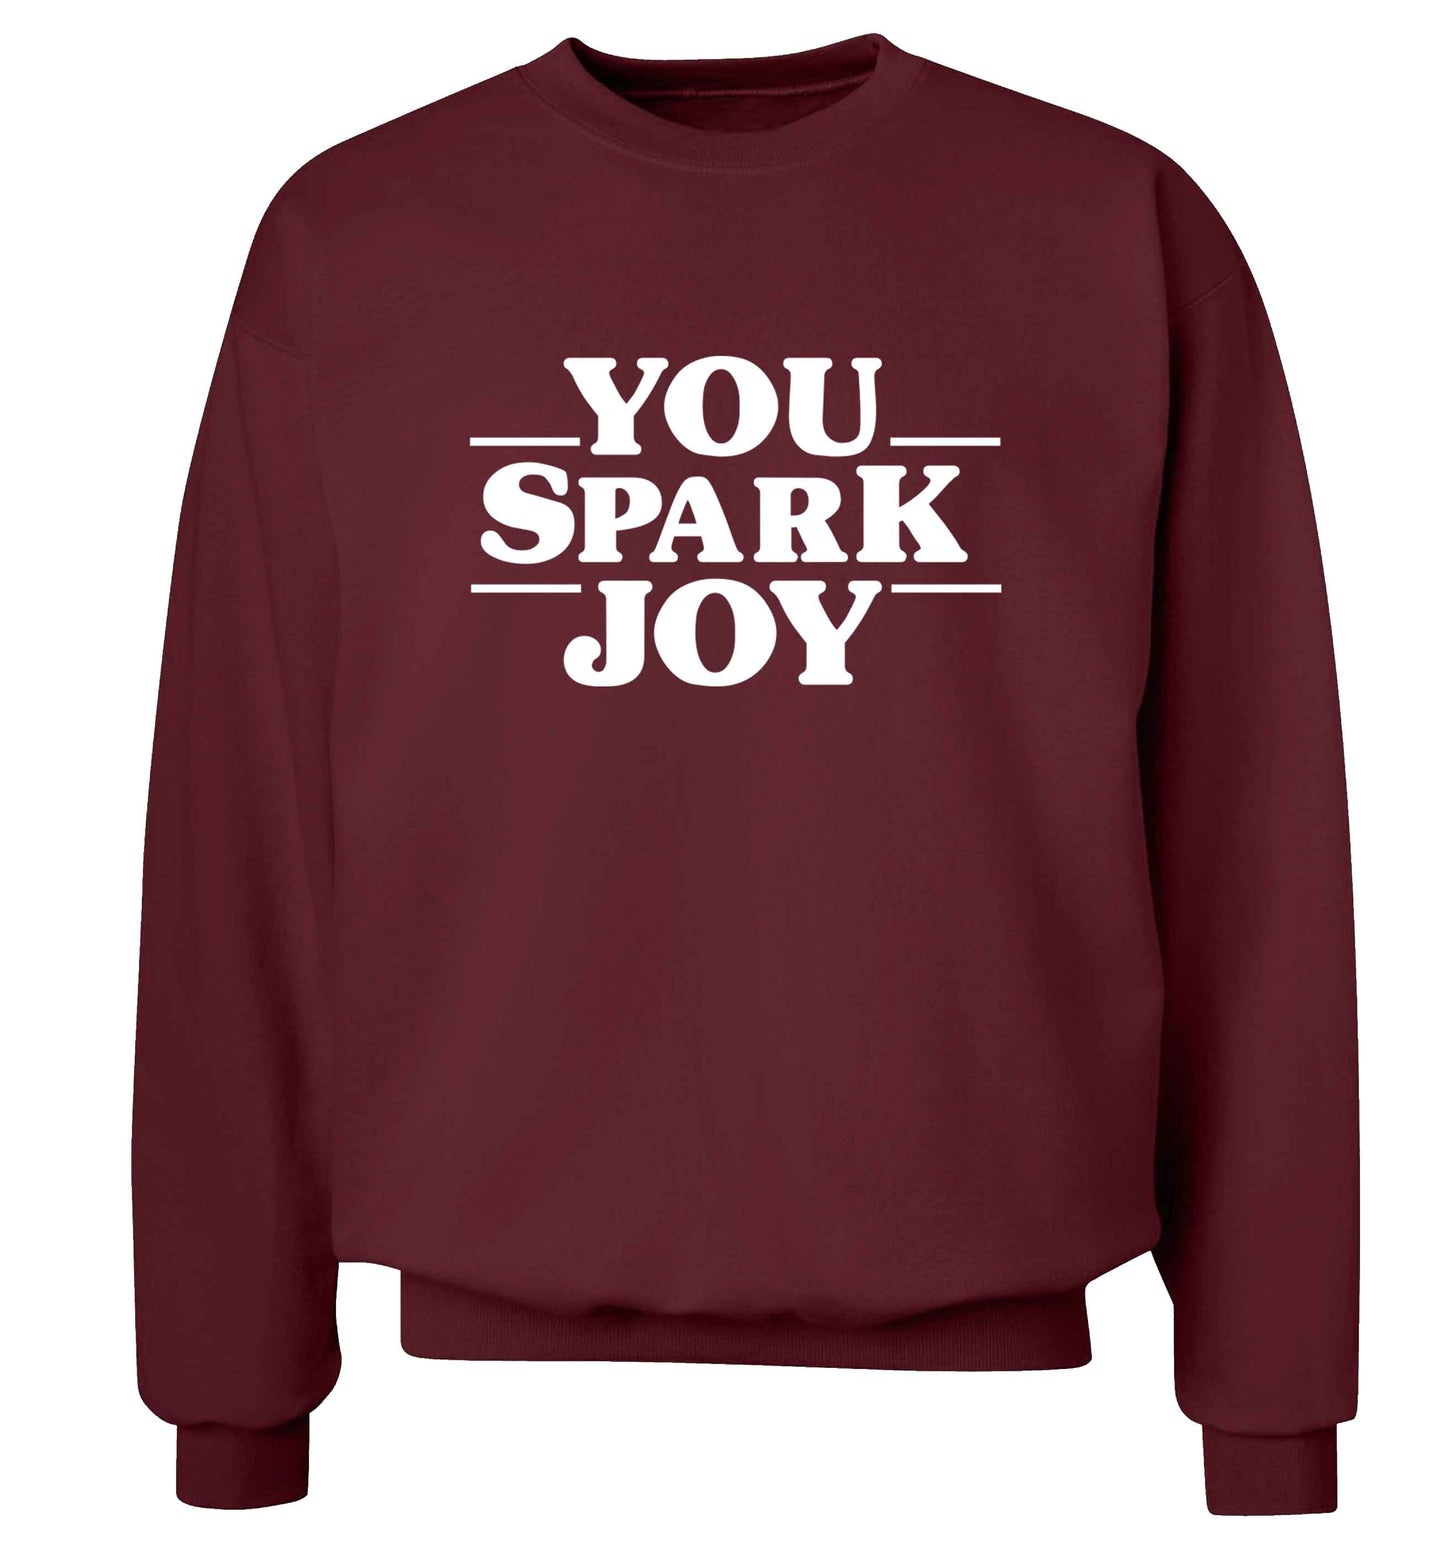 You spark joy adult's unisex maroon sweater 2XL